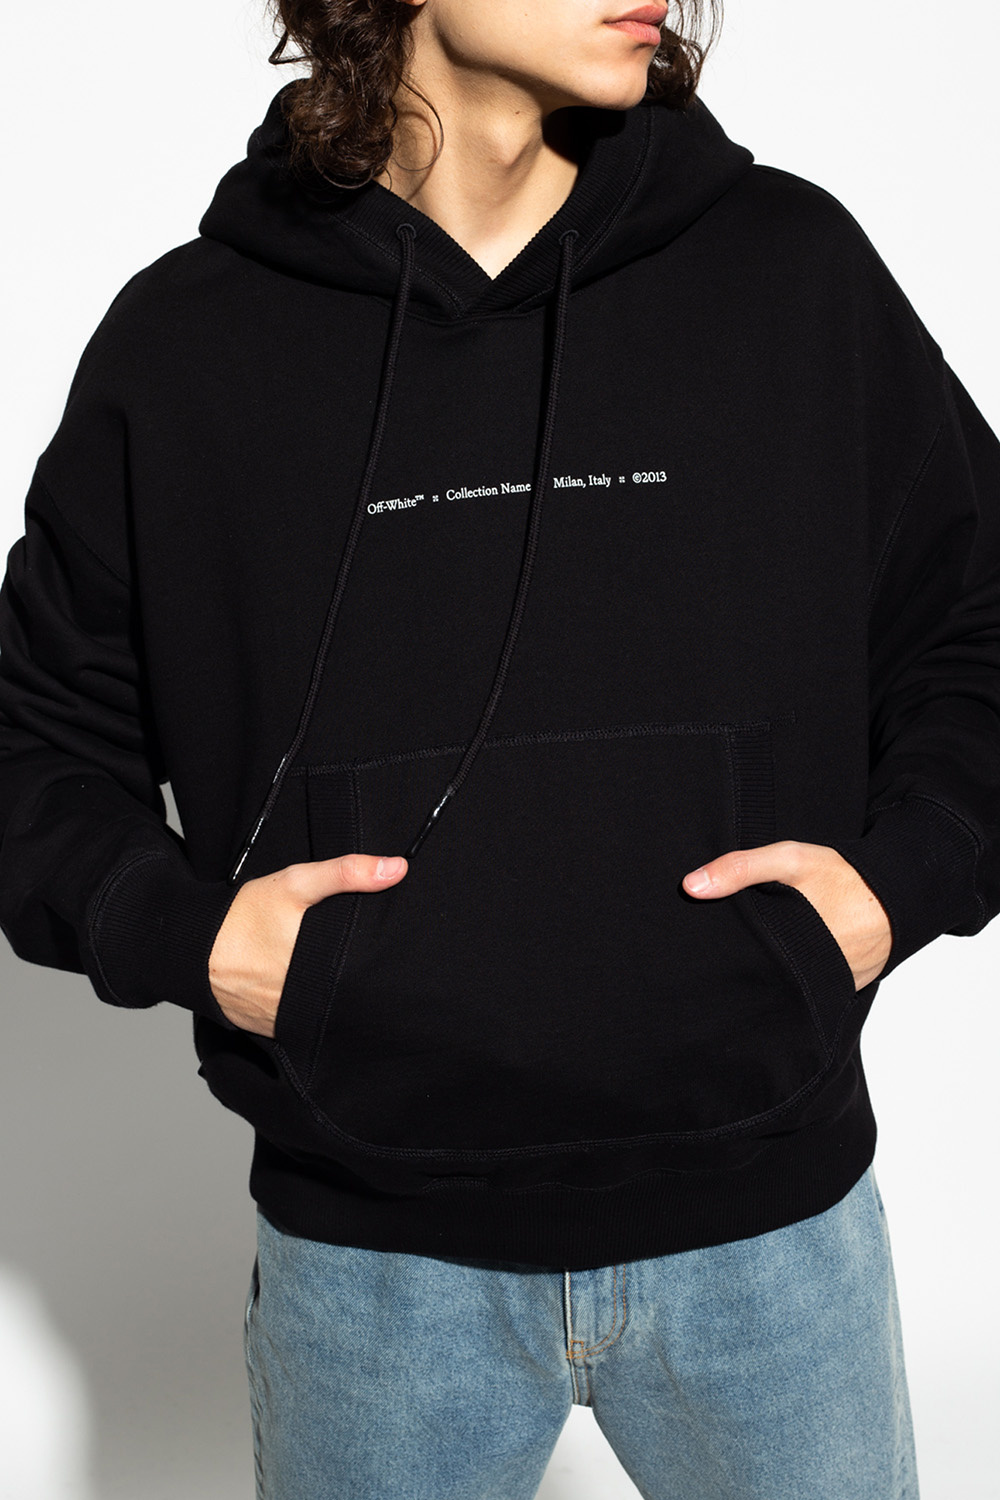 Off-White Oversize Market hoodie